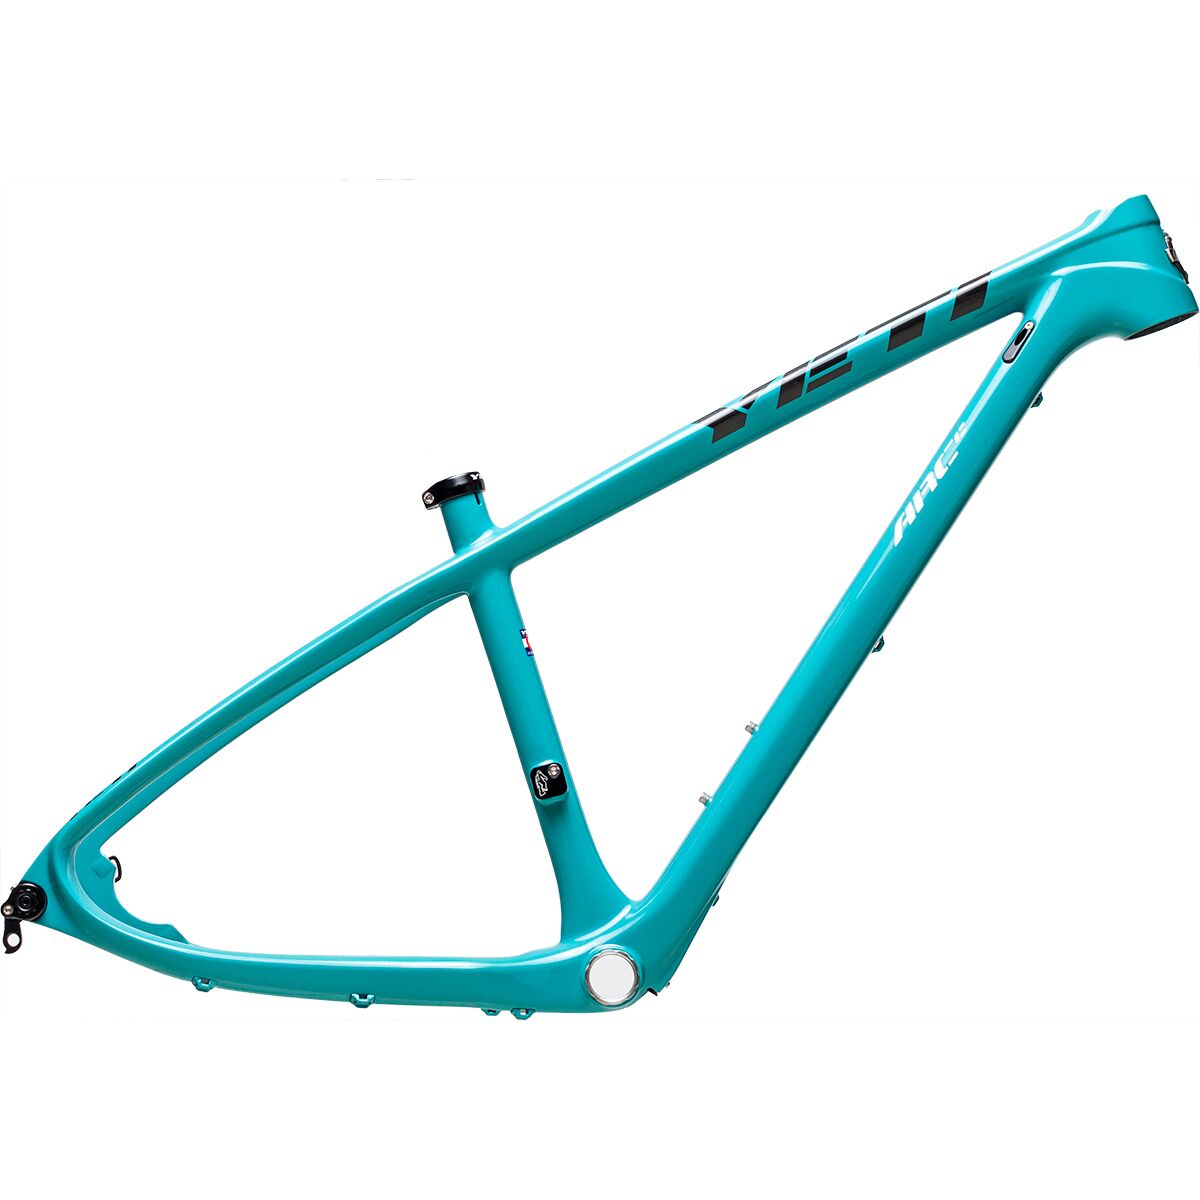 Yeti Cycles ARC Carbon Mountain Bike Frame - 2016